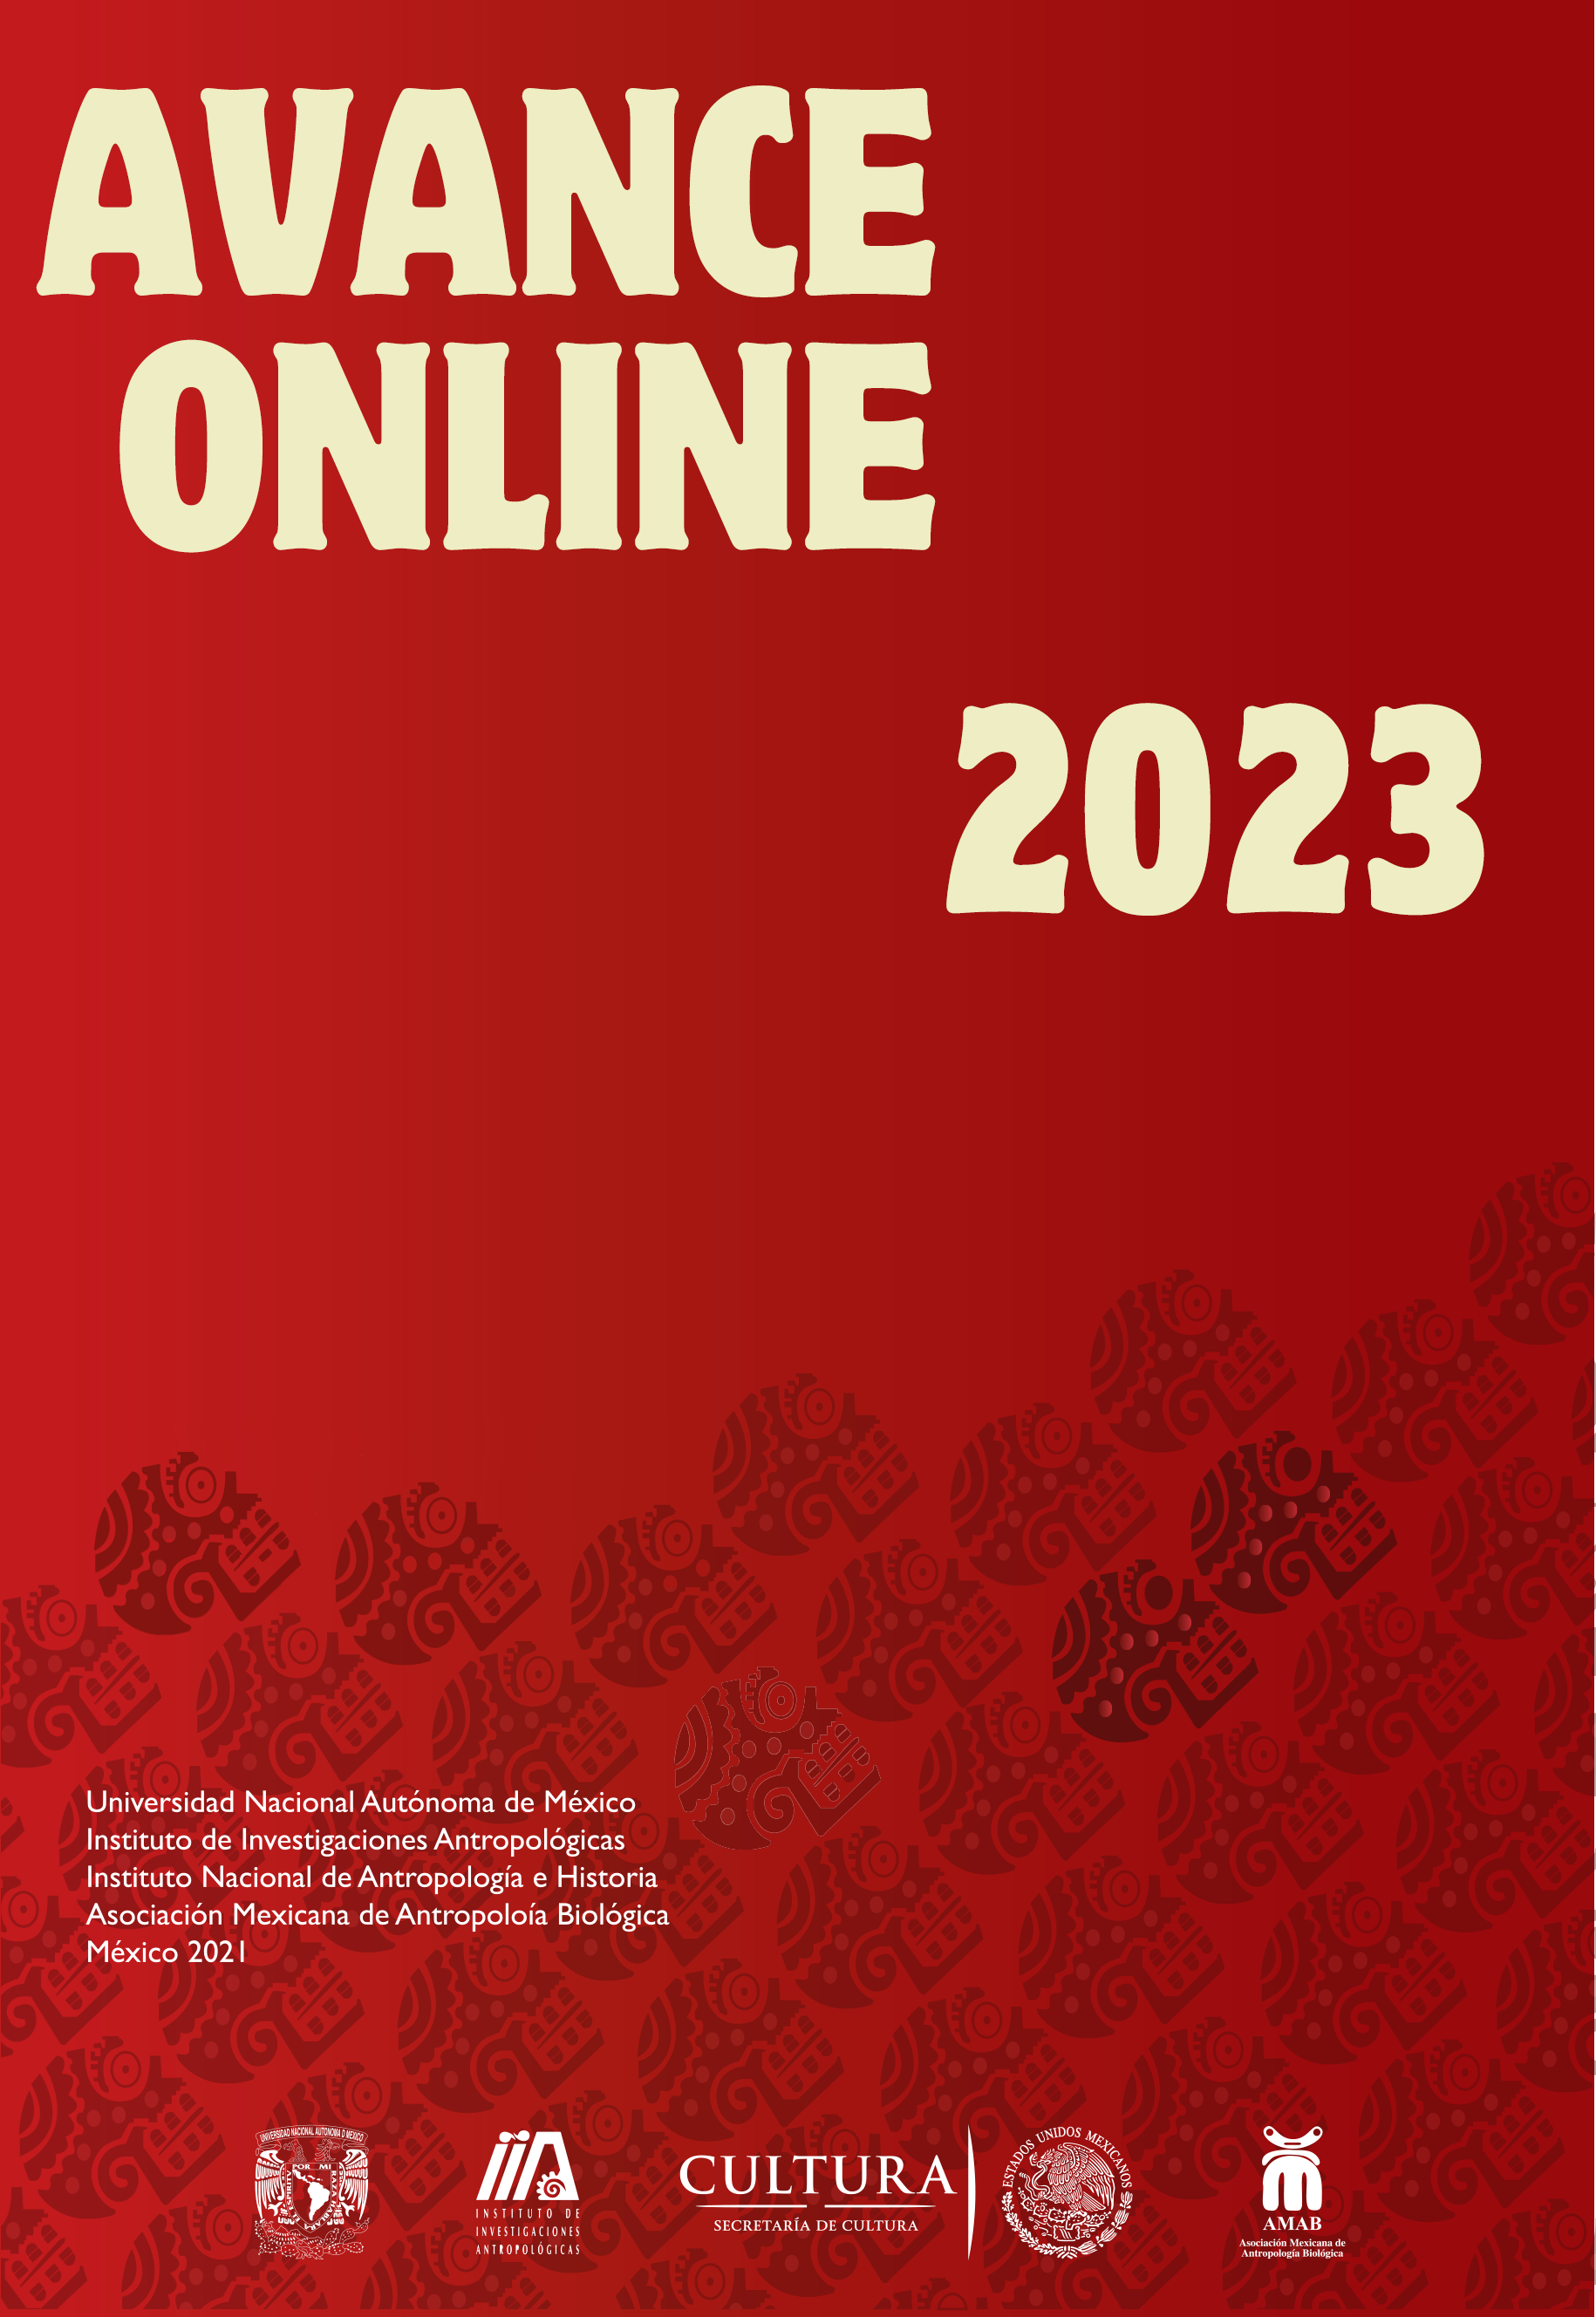 					Ver 2023: Avance online 2023
				